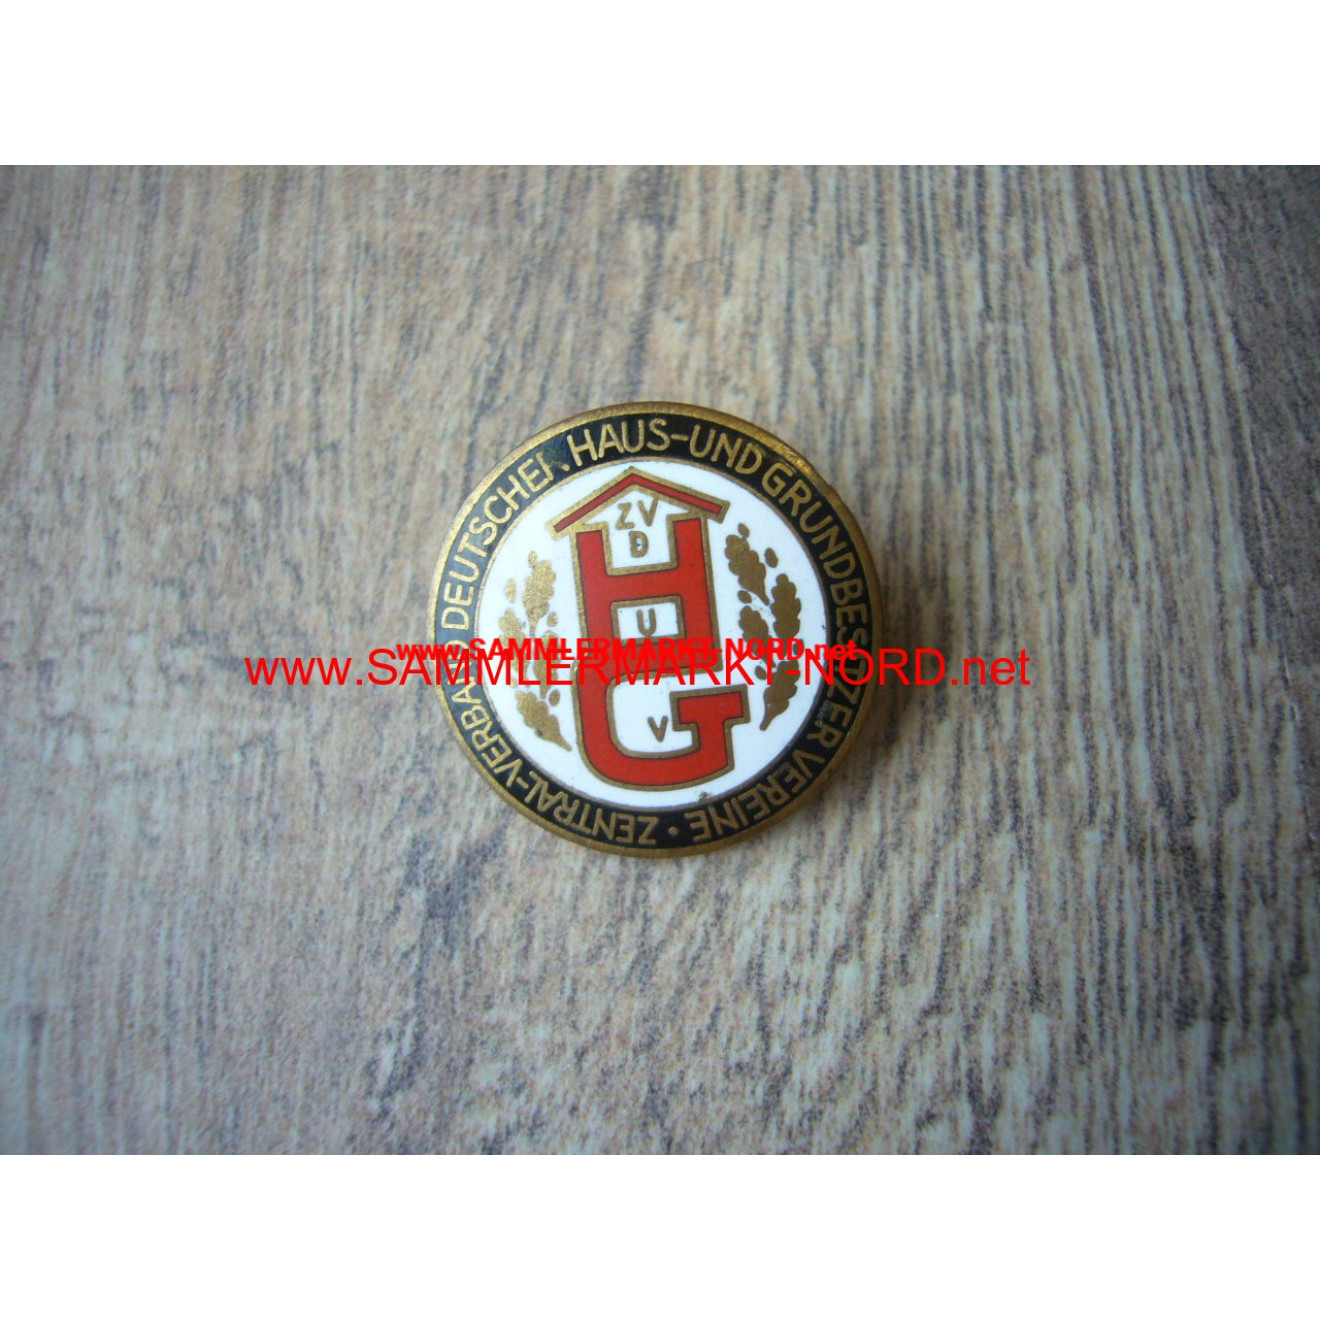 Central Association of German Homeowners - Membership Badge